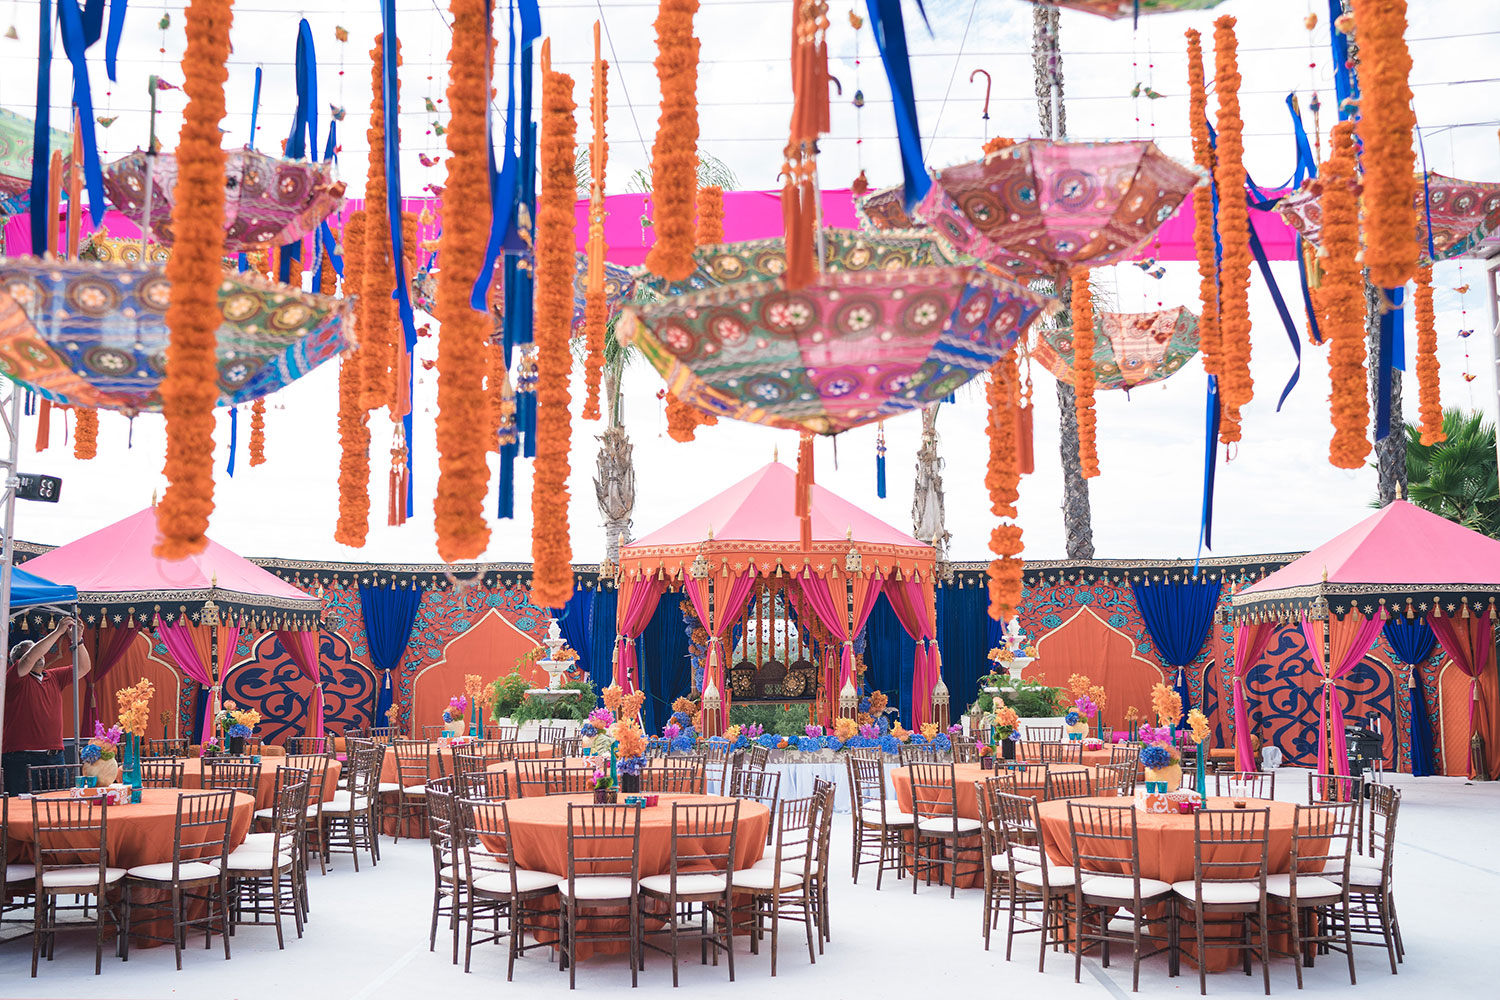 raj-tents-indian-wedding-colorful-setting.jpg